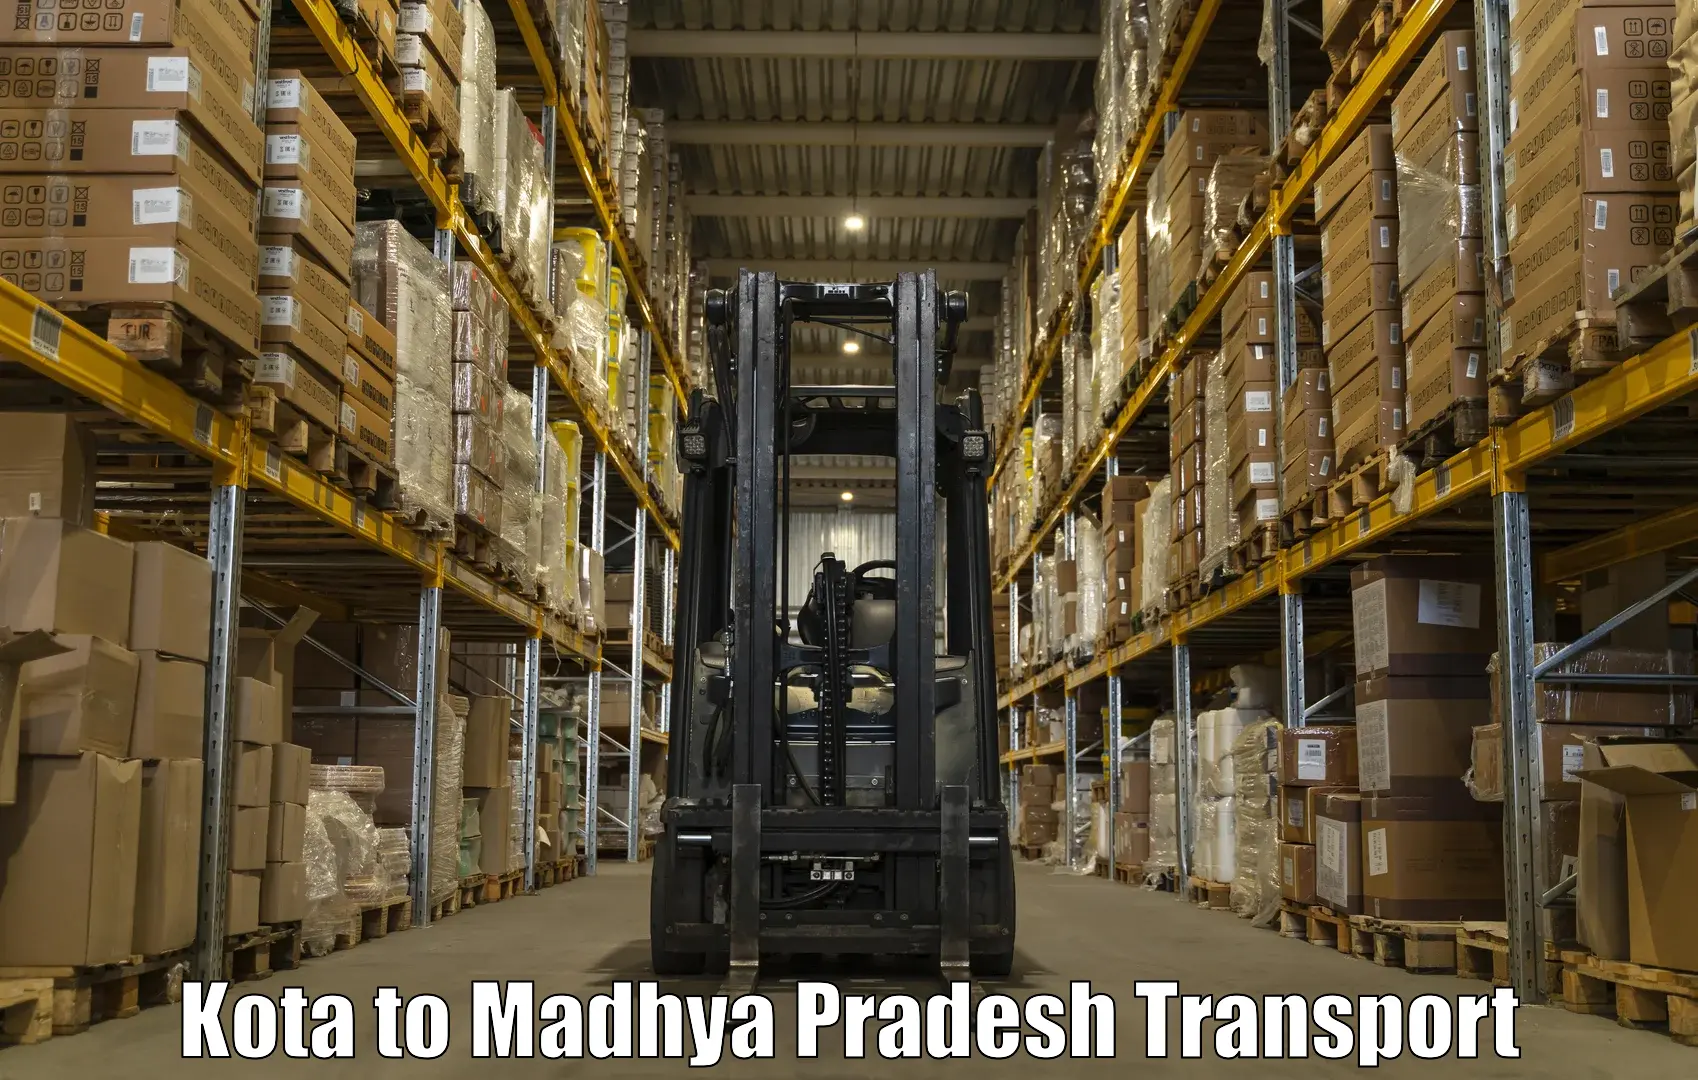 Truck transport companies in India Kota to Ashoknagar